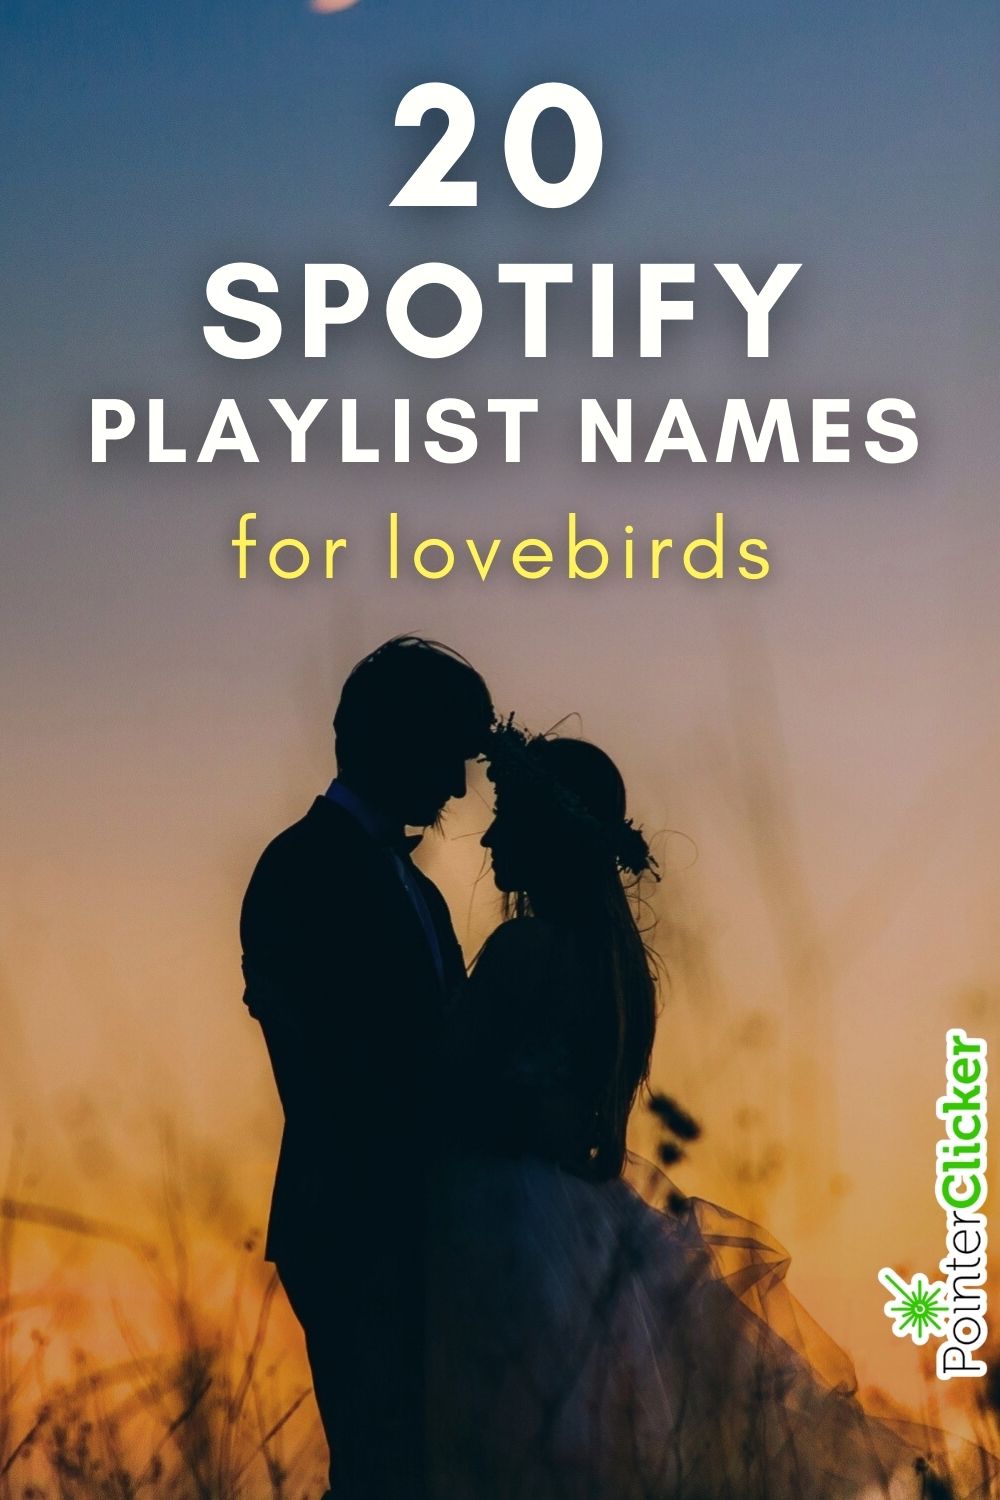 20 spotify playlist names for lovebirds